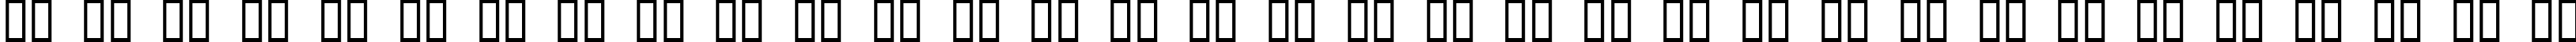 Пример написания русского алфавита шрифтом Ghostbusters